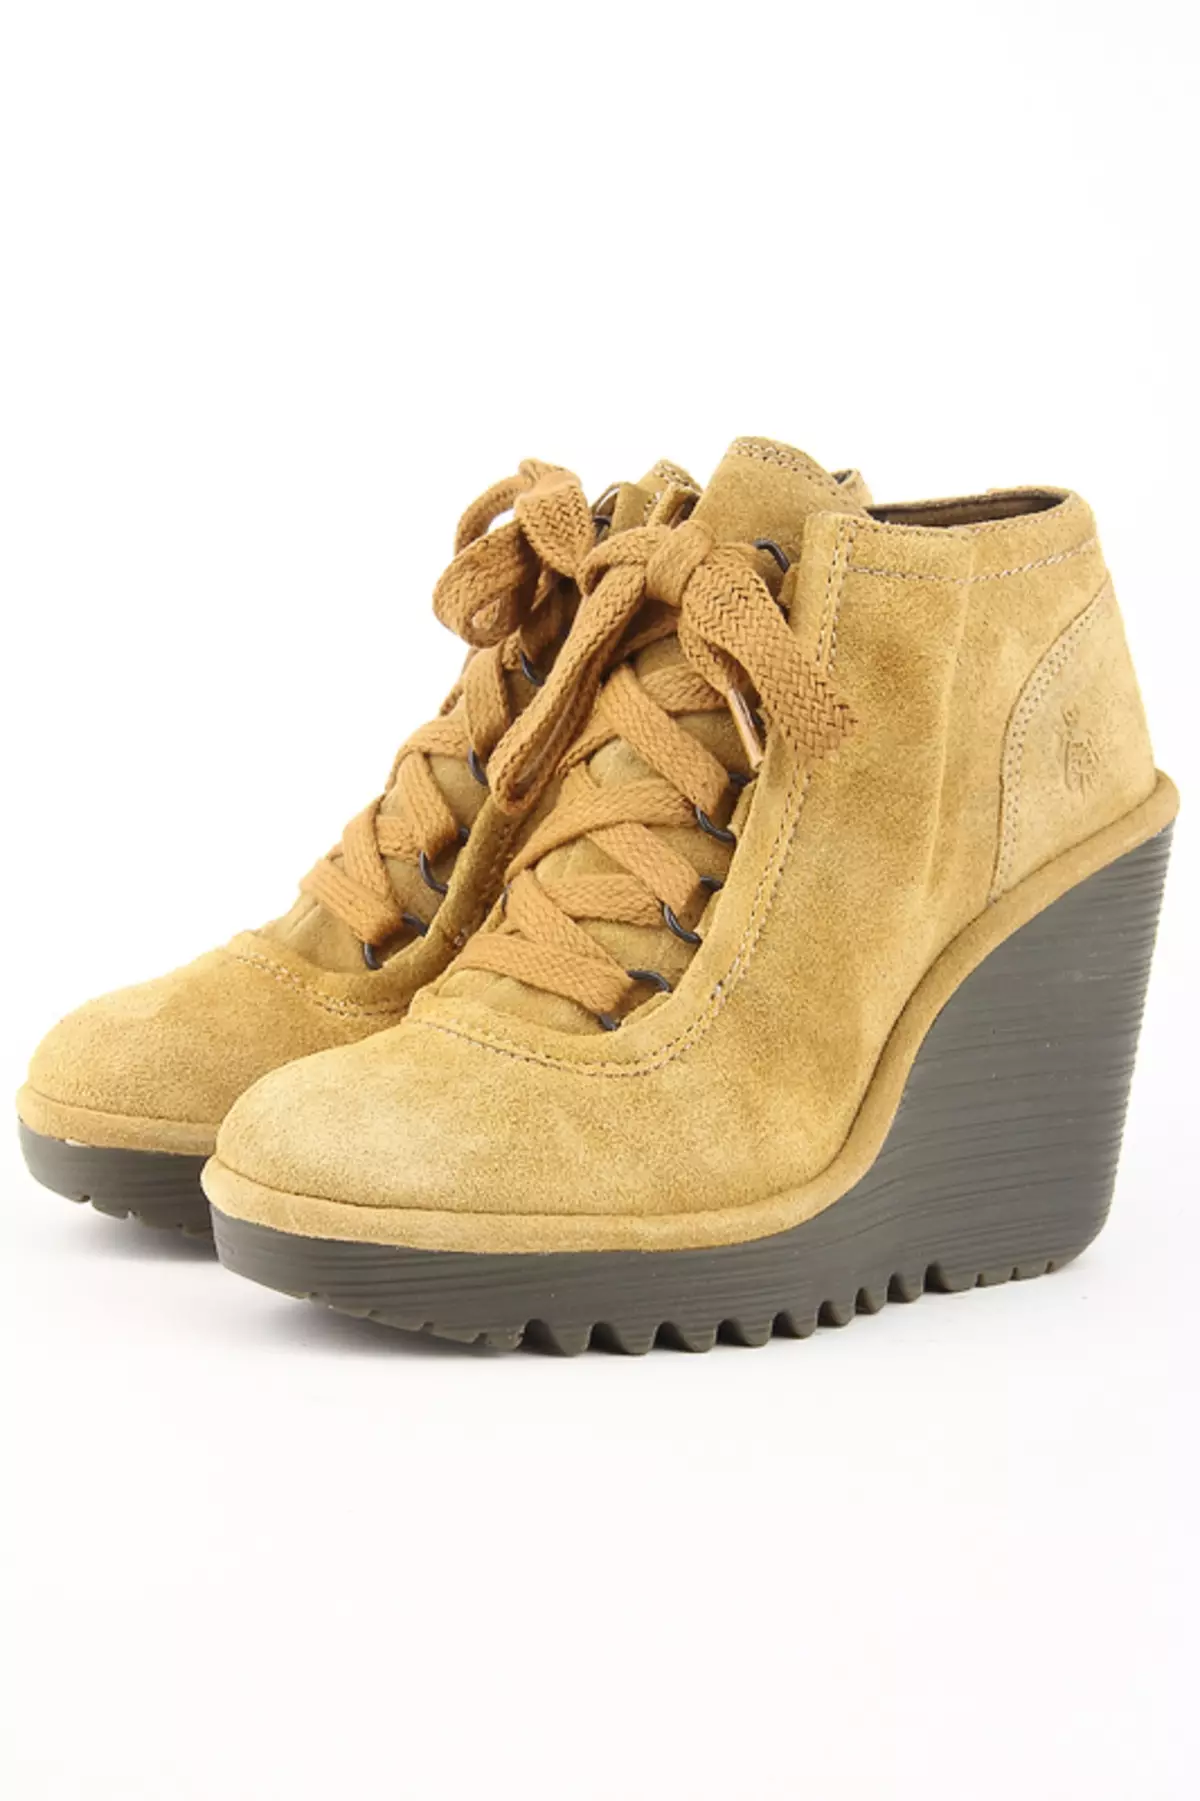 Boots (135 wêne): Trendên Fashion 2021, ji Rock Rock, Eva, Camel, Grinders, How to Wear Derby With Jeans, Mîlîtar & Burgundy Style 1842_83